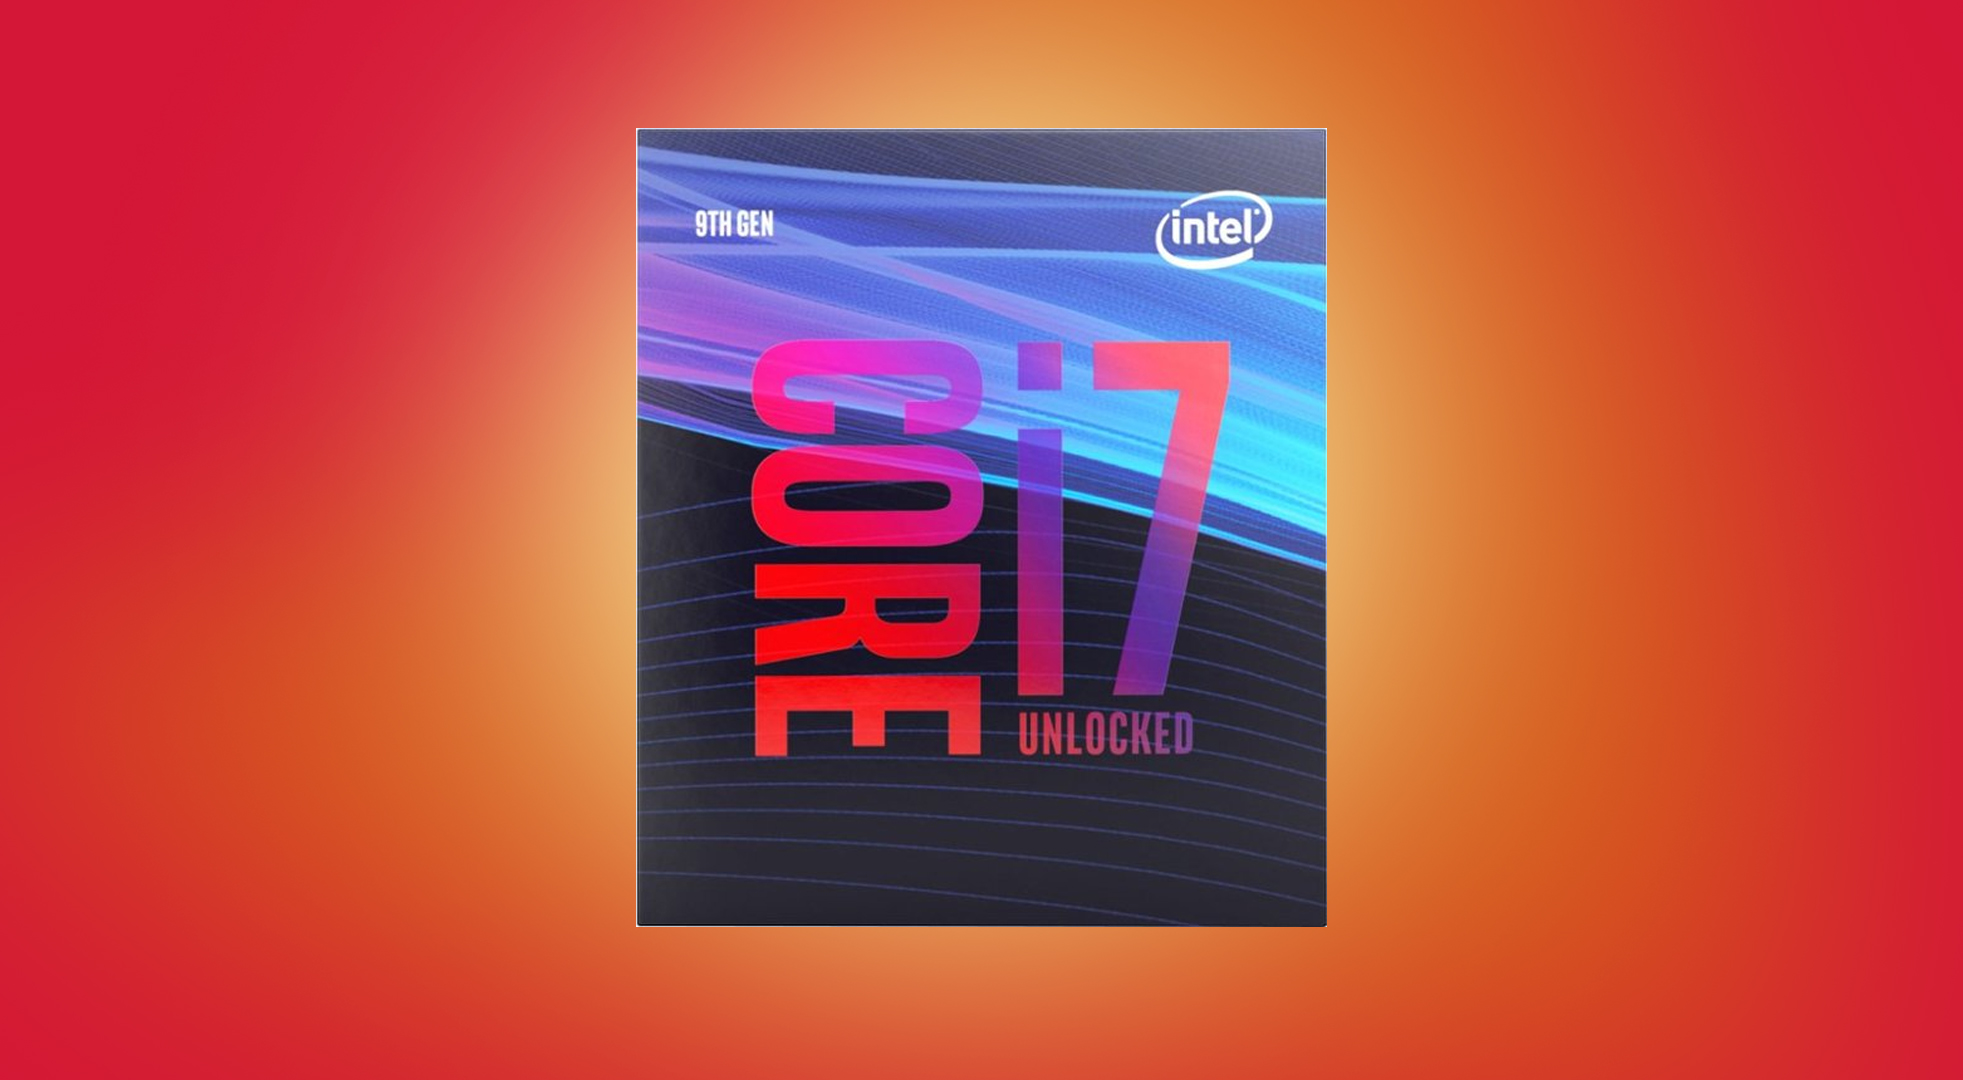 Intel i7 9700K CPU Discounted 17% Through Buy | Tom's Hardware